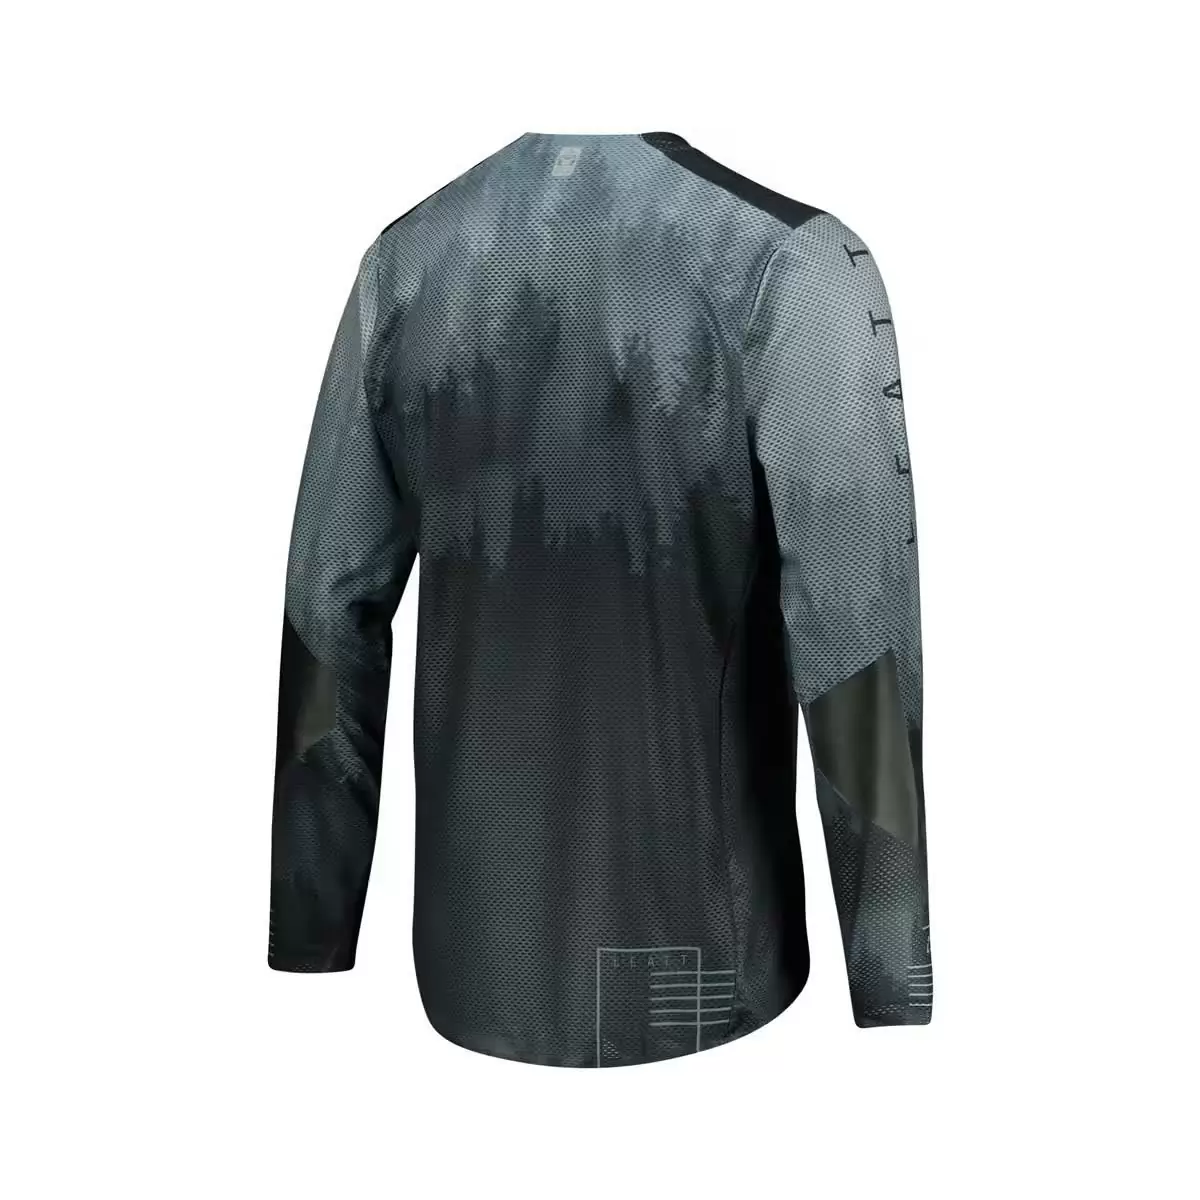 Camisola de manga comprida Mtb Gravity 4.0 preto tamanho XL #1